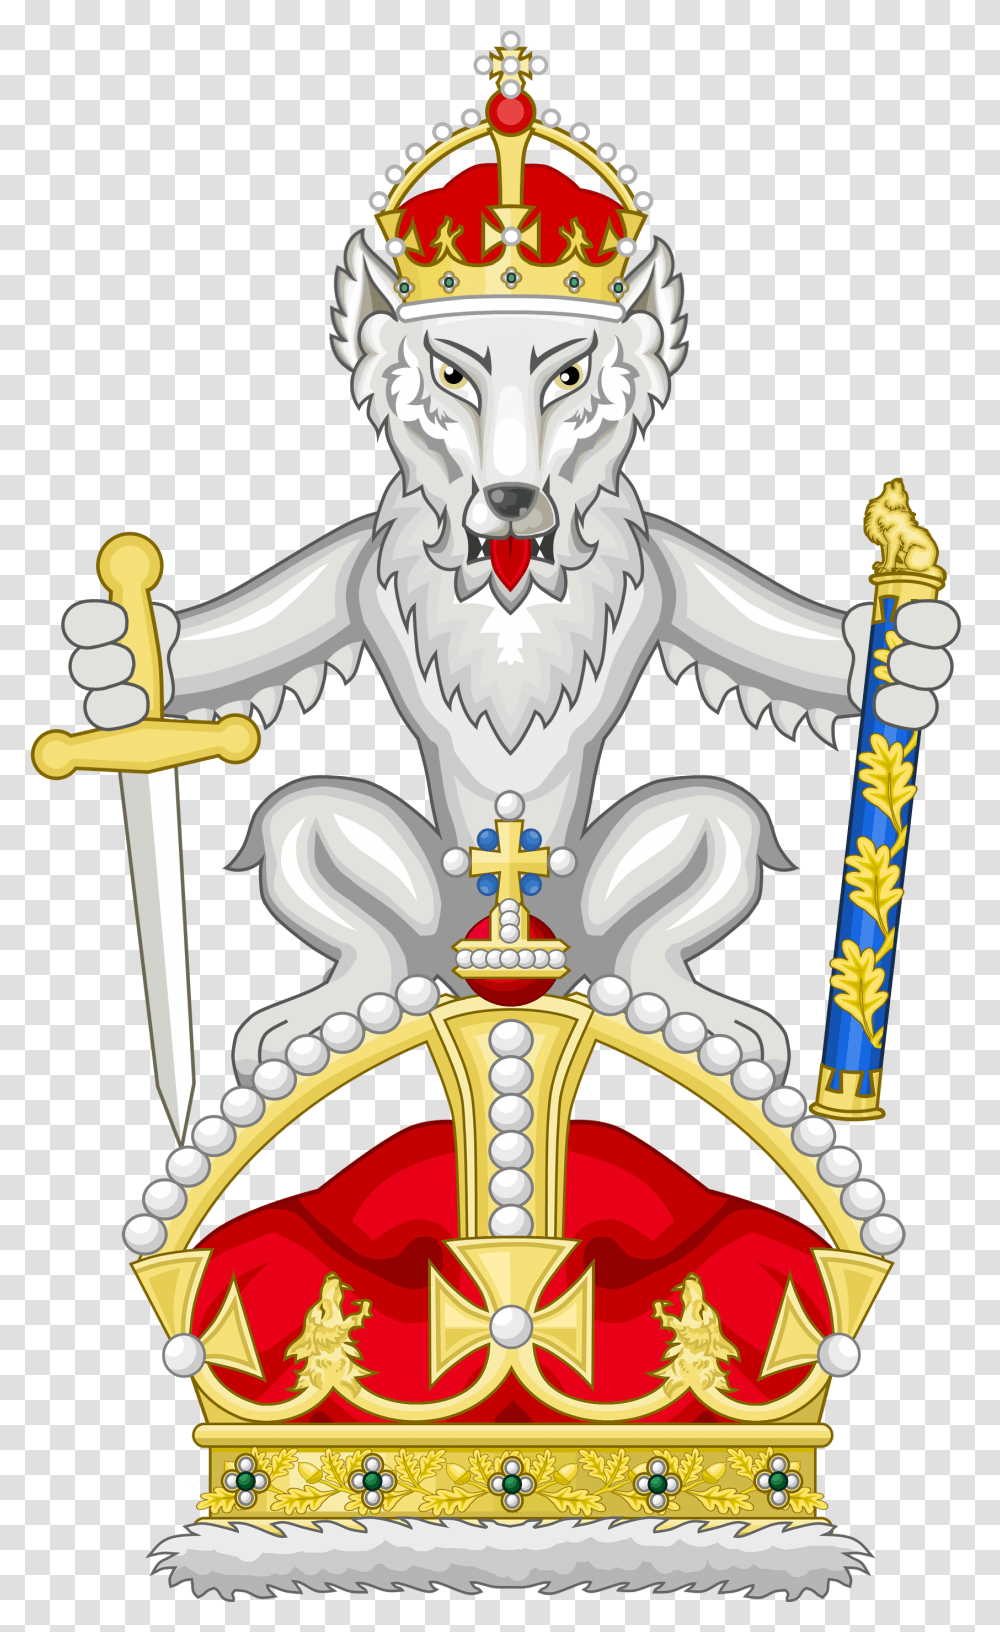 Filethe Royal Badge Of Victoriapng Micraswiki Crown Coat Of Arms, Emblem, Symbol, Architecture, Building Transparent Png